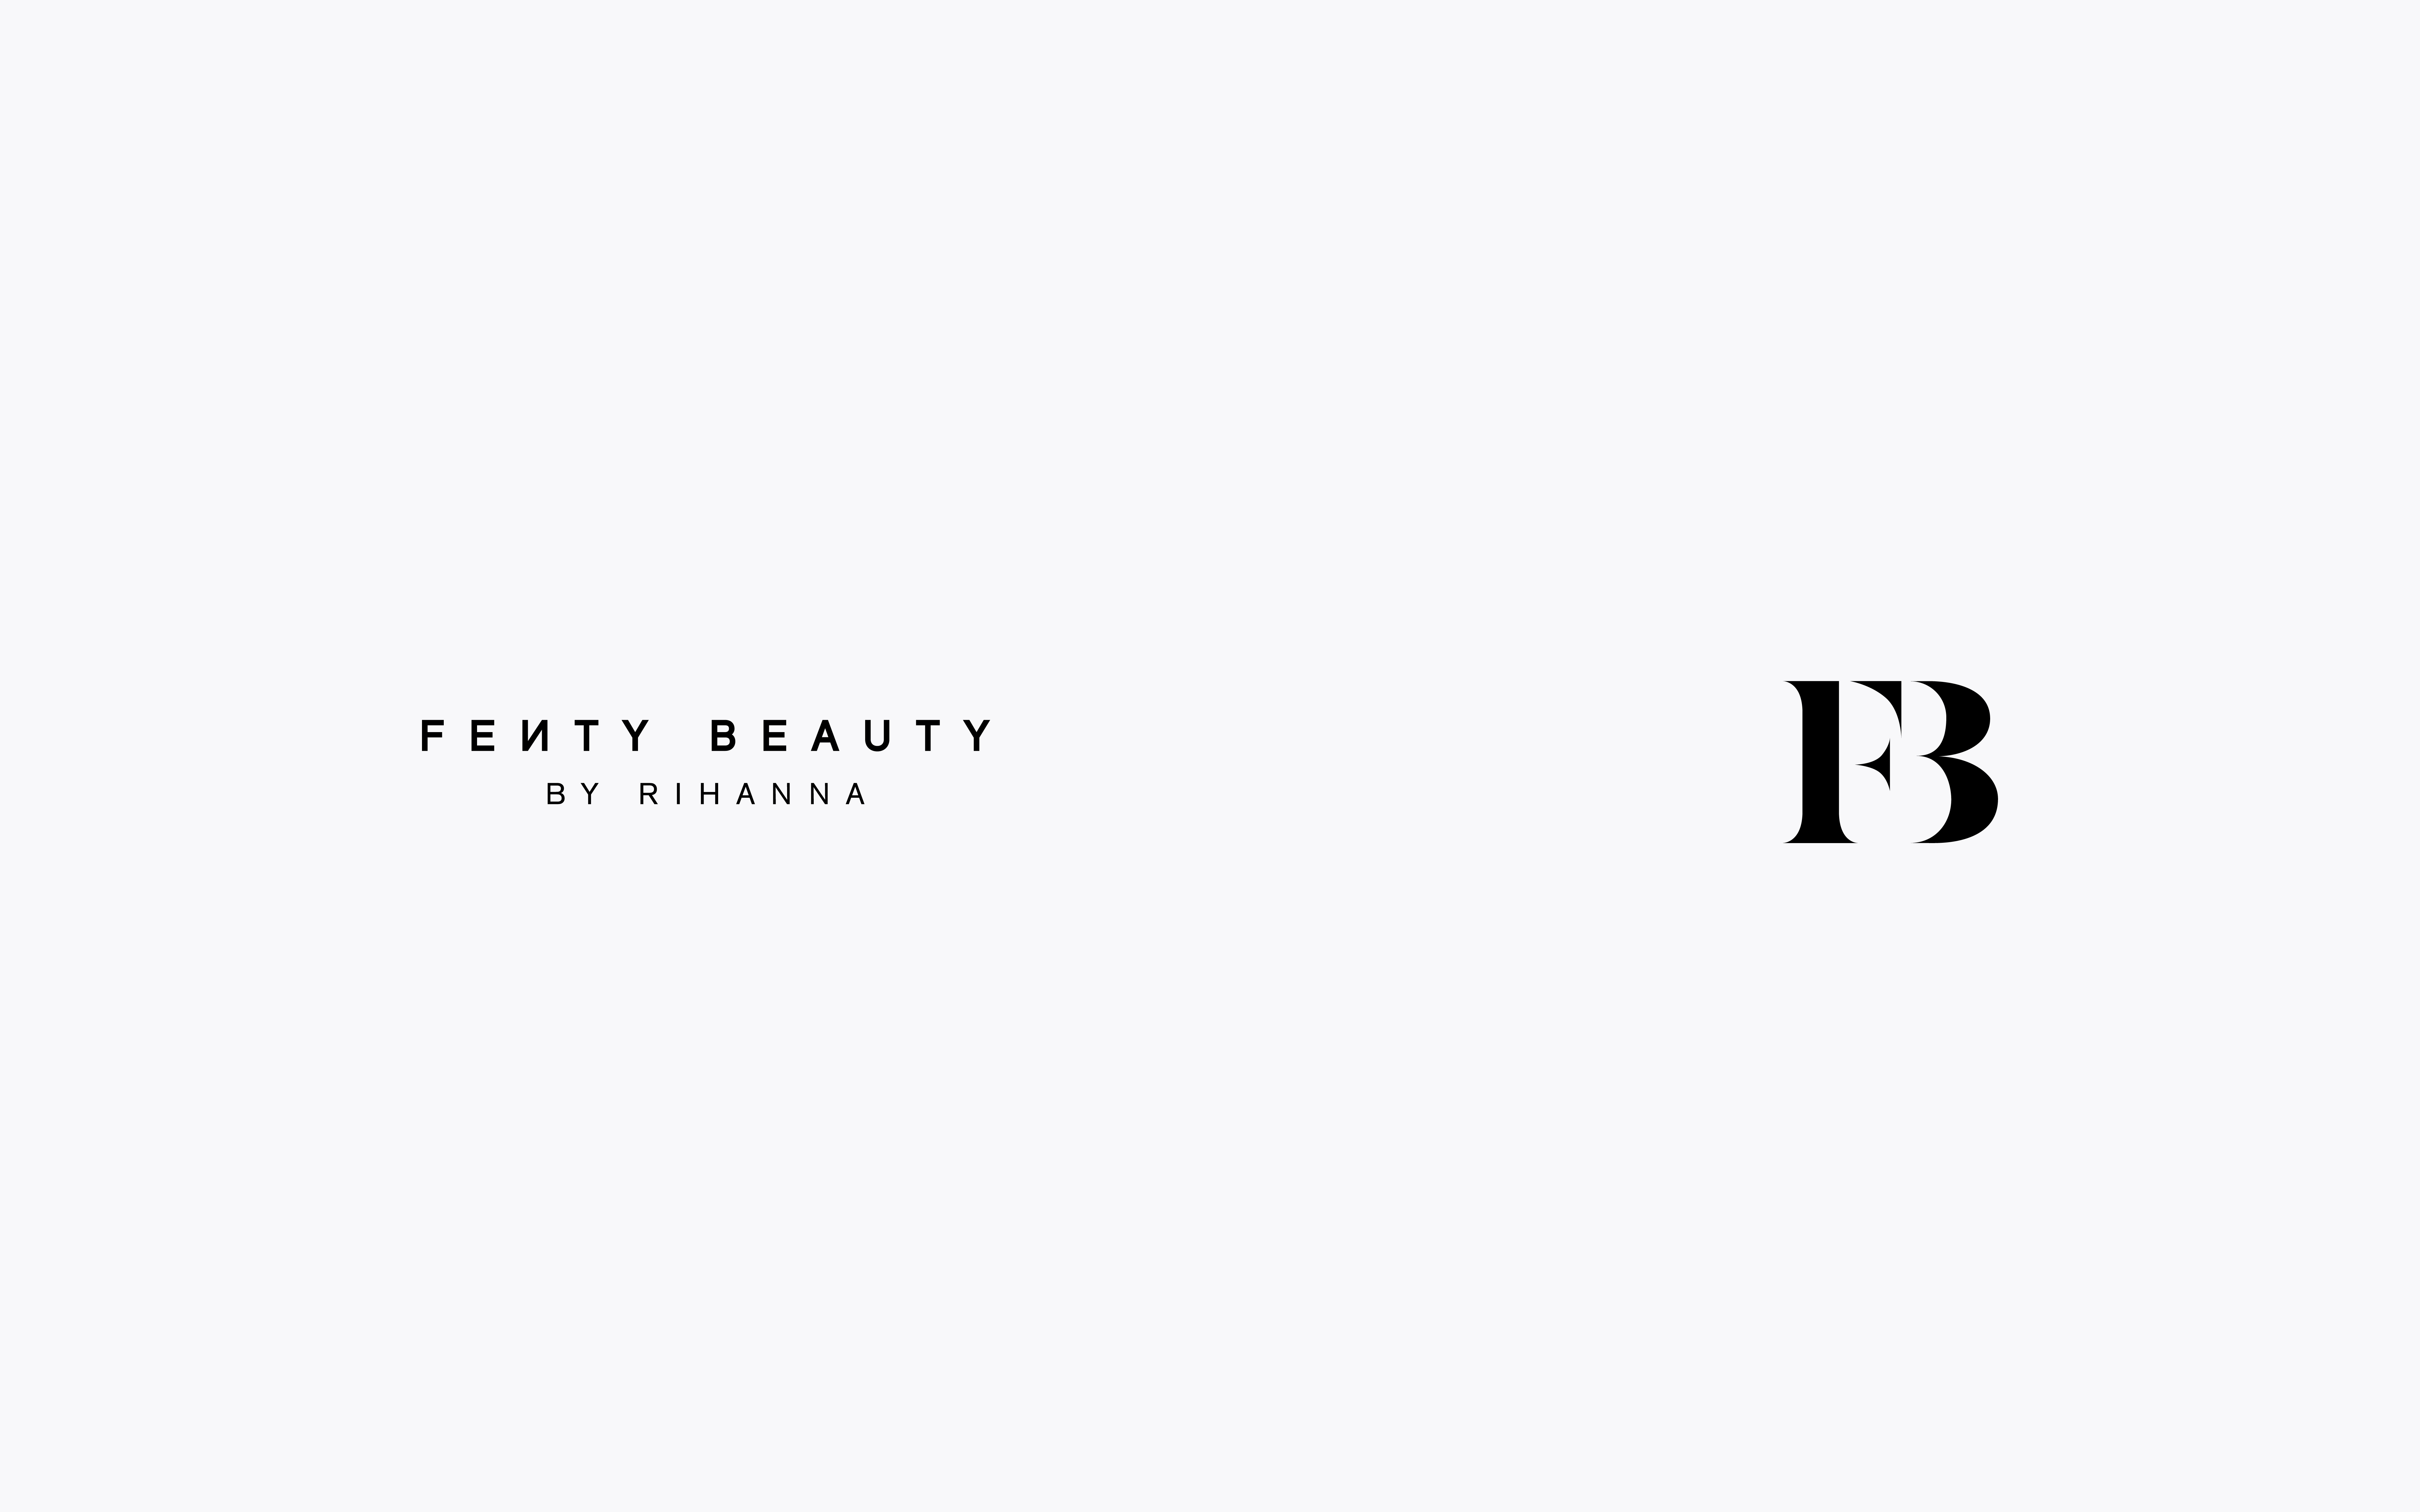 fenty beauty logo